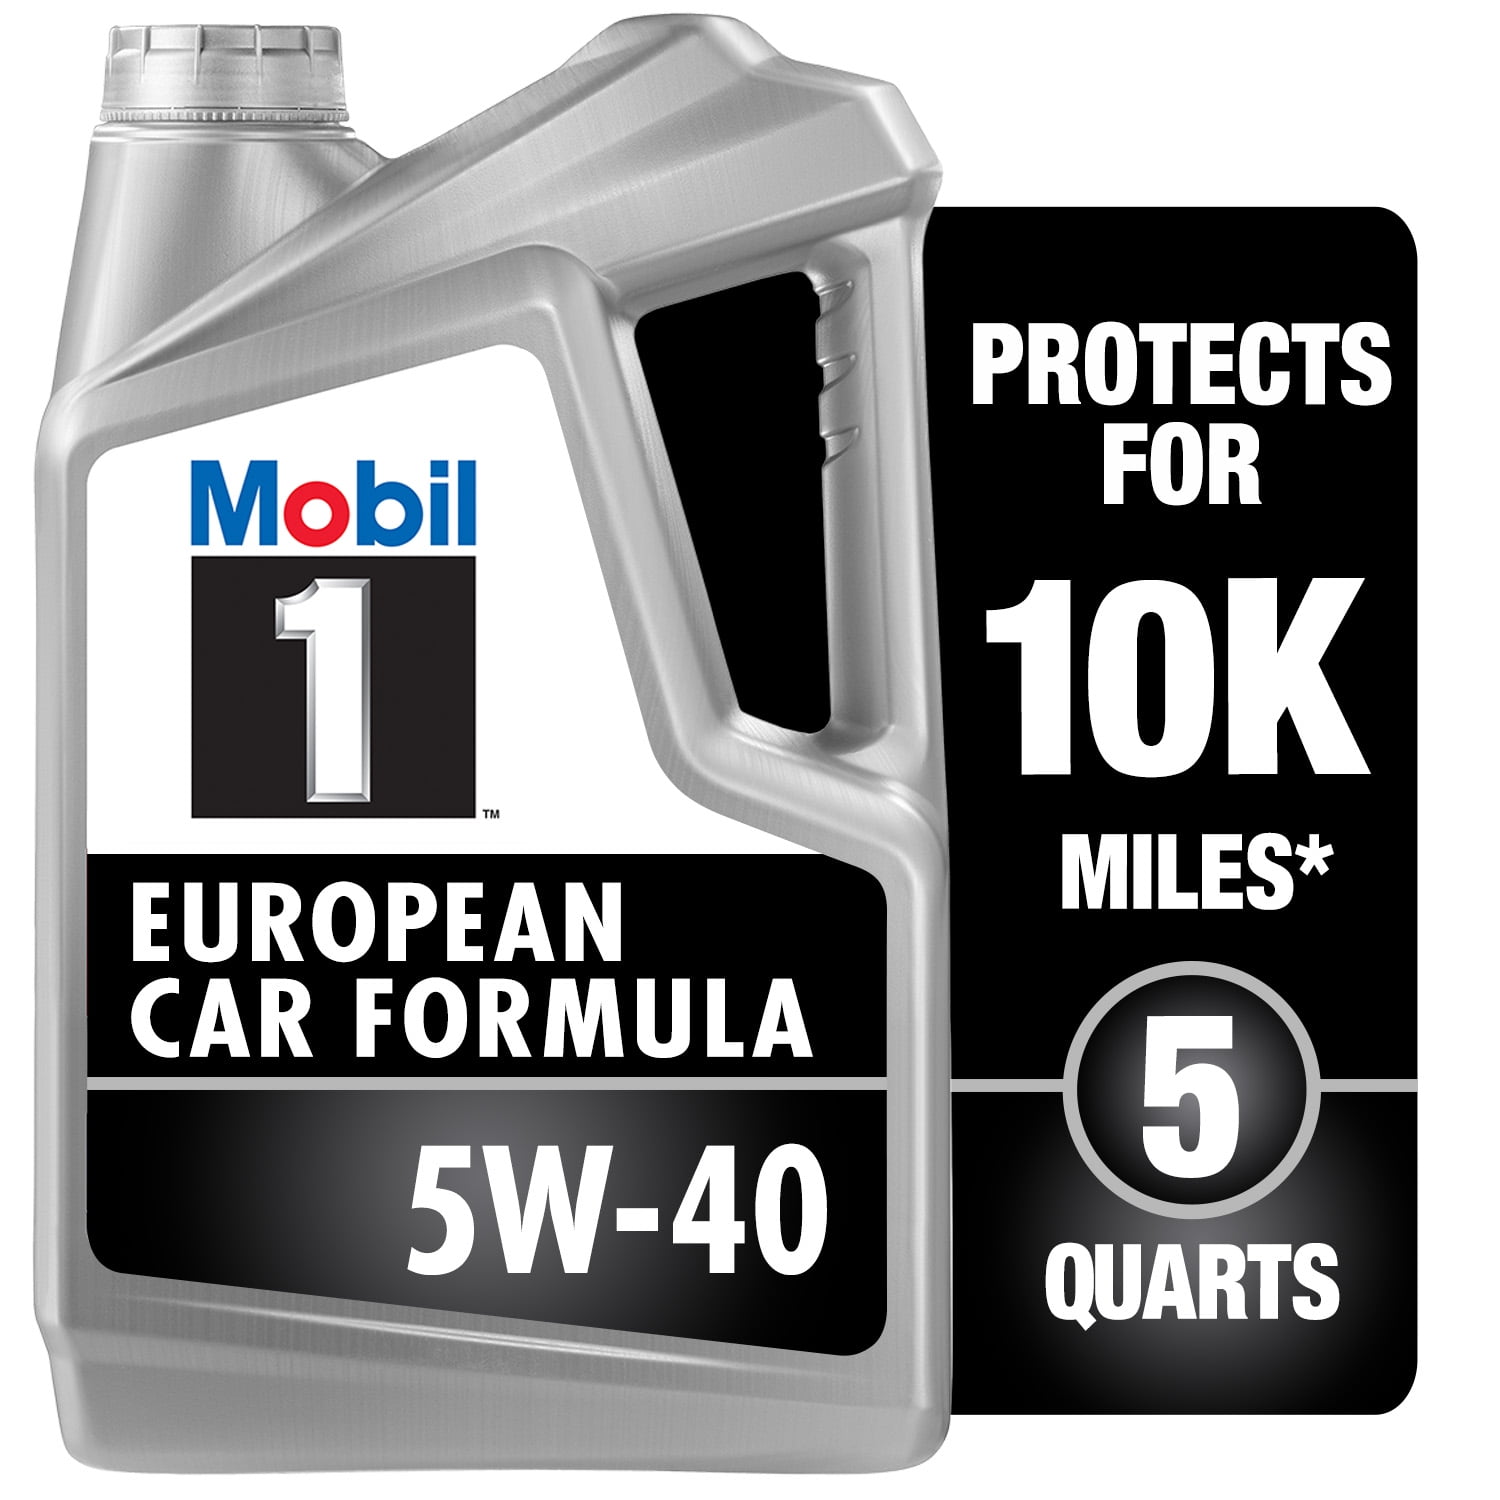 mobil-1-fs-european-car-formula-full-synthetic-motor-oil-5w-40-5-quart